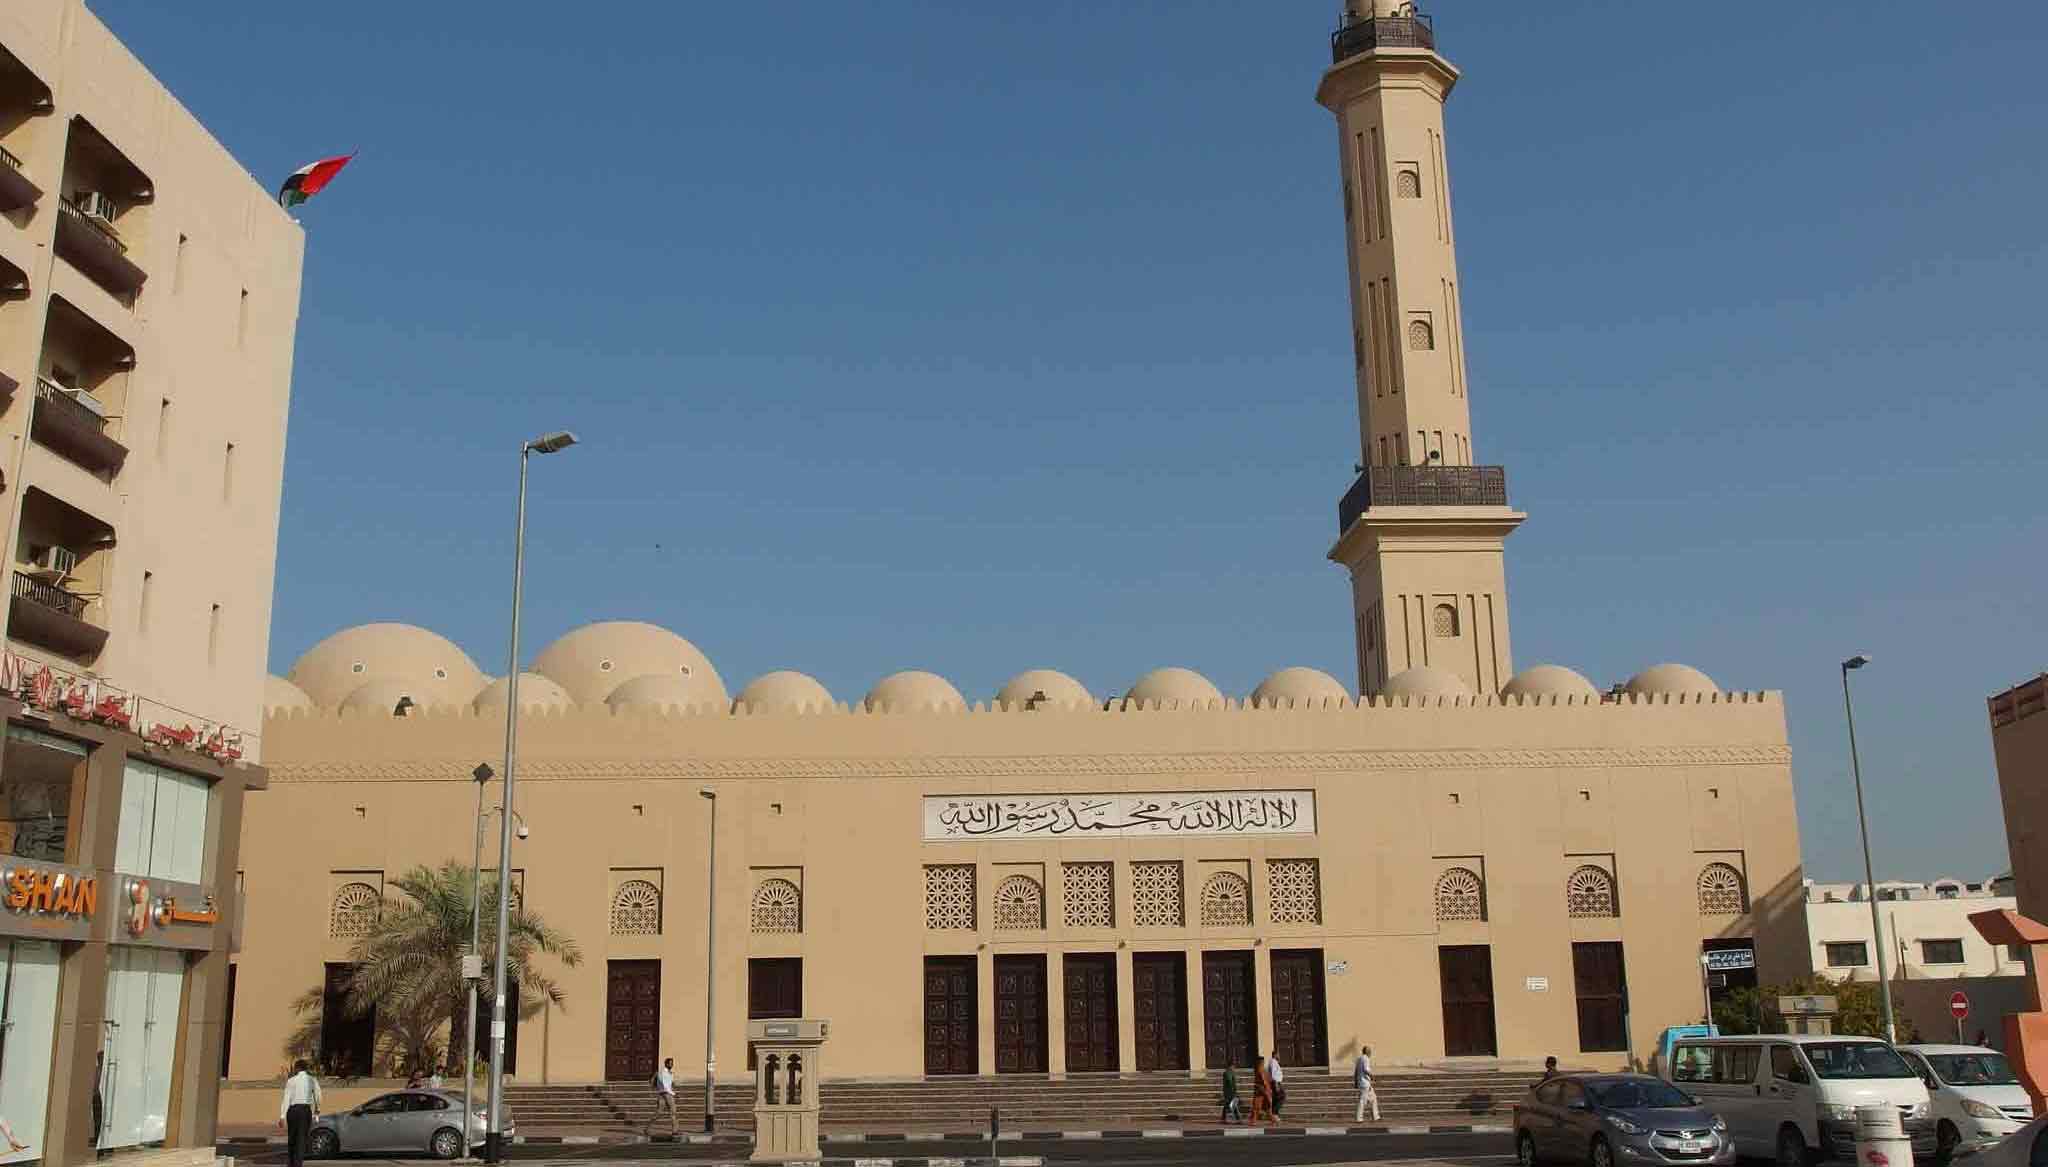 Grand Mosque Dubai is oldest masjid in Dubai